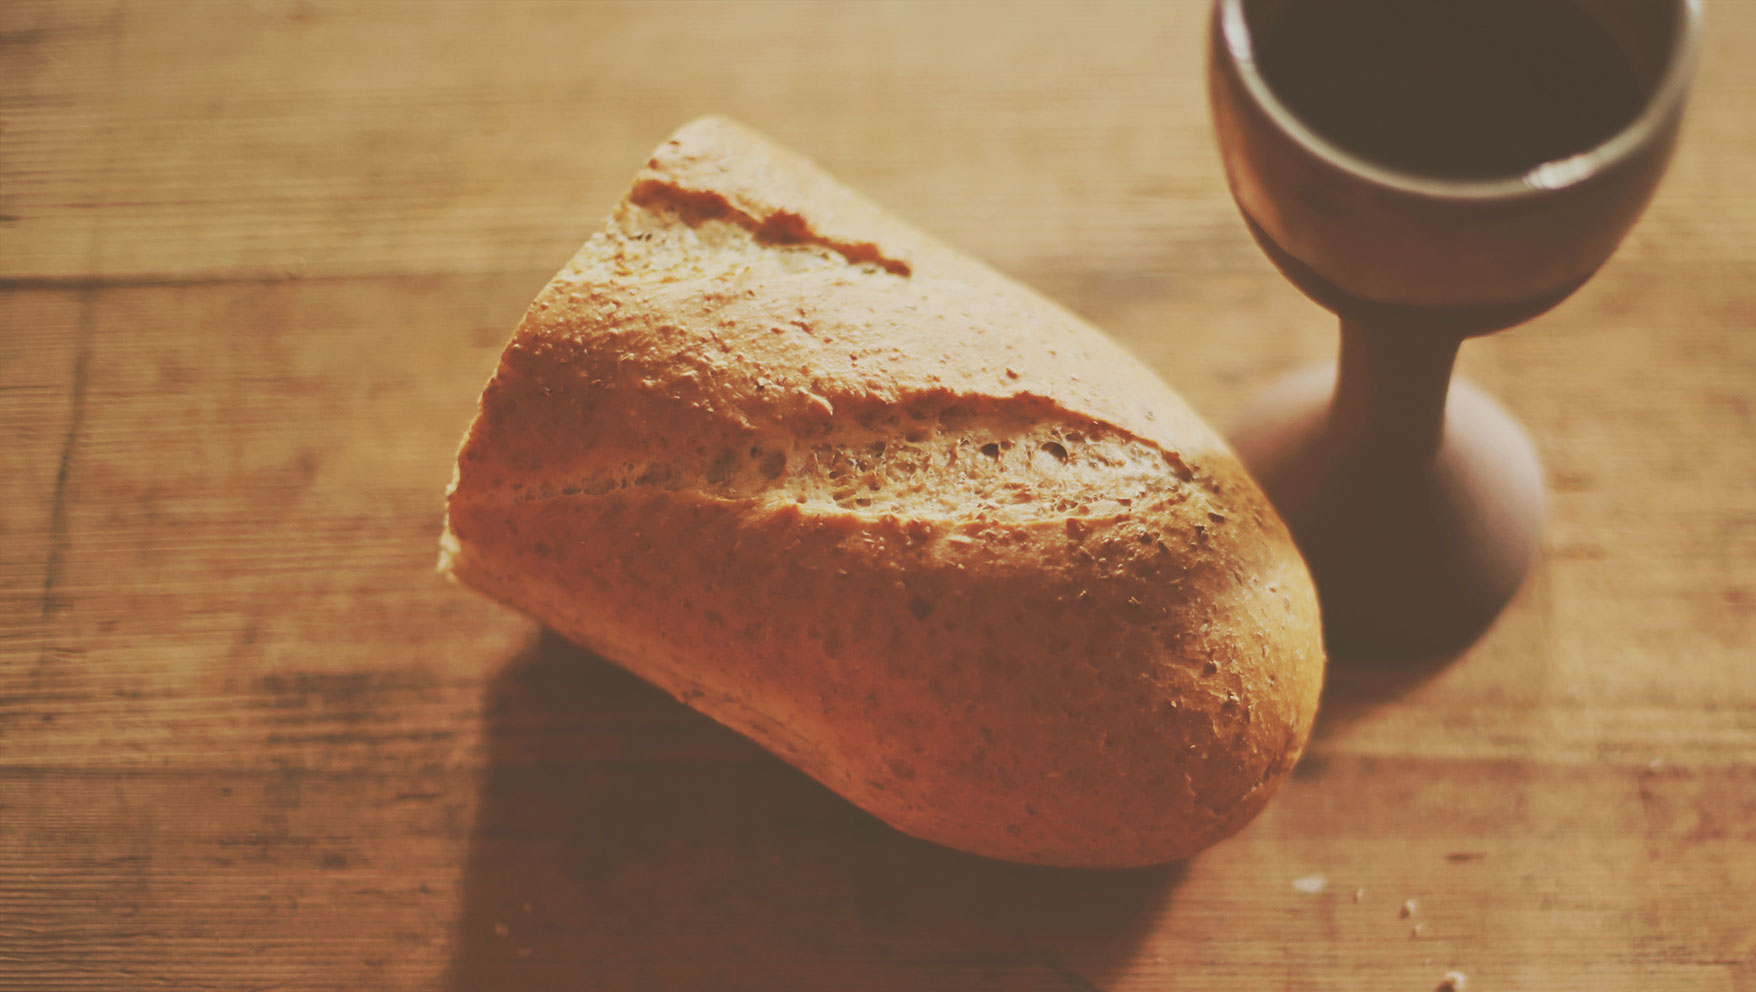 Sacramental bread - Bread